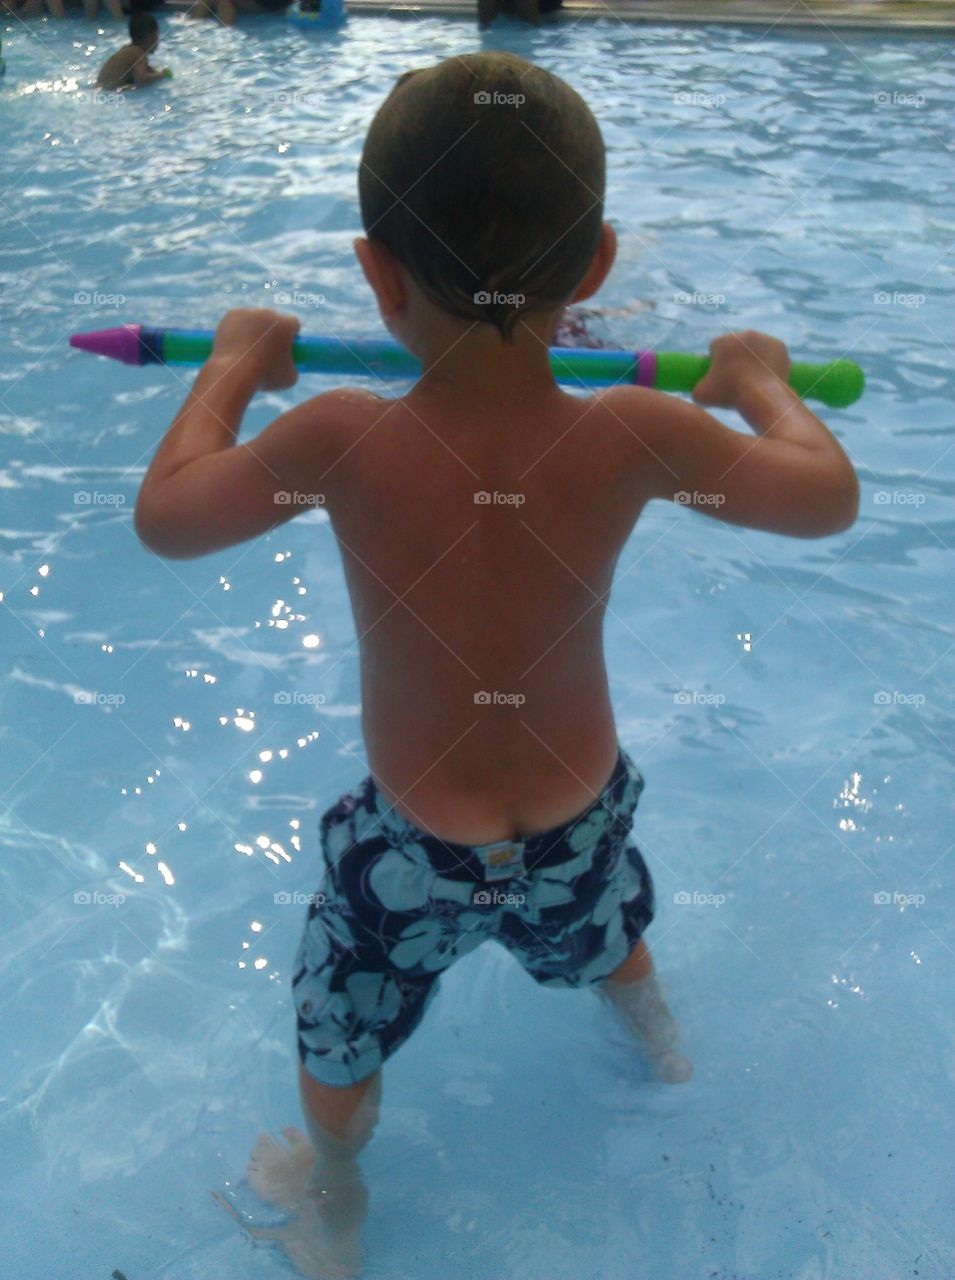 My Baby Boy Playin in the Pool